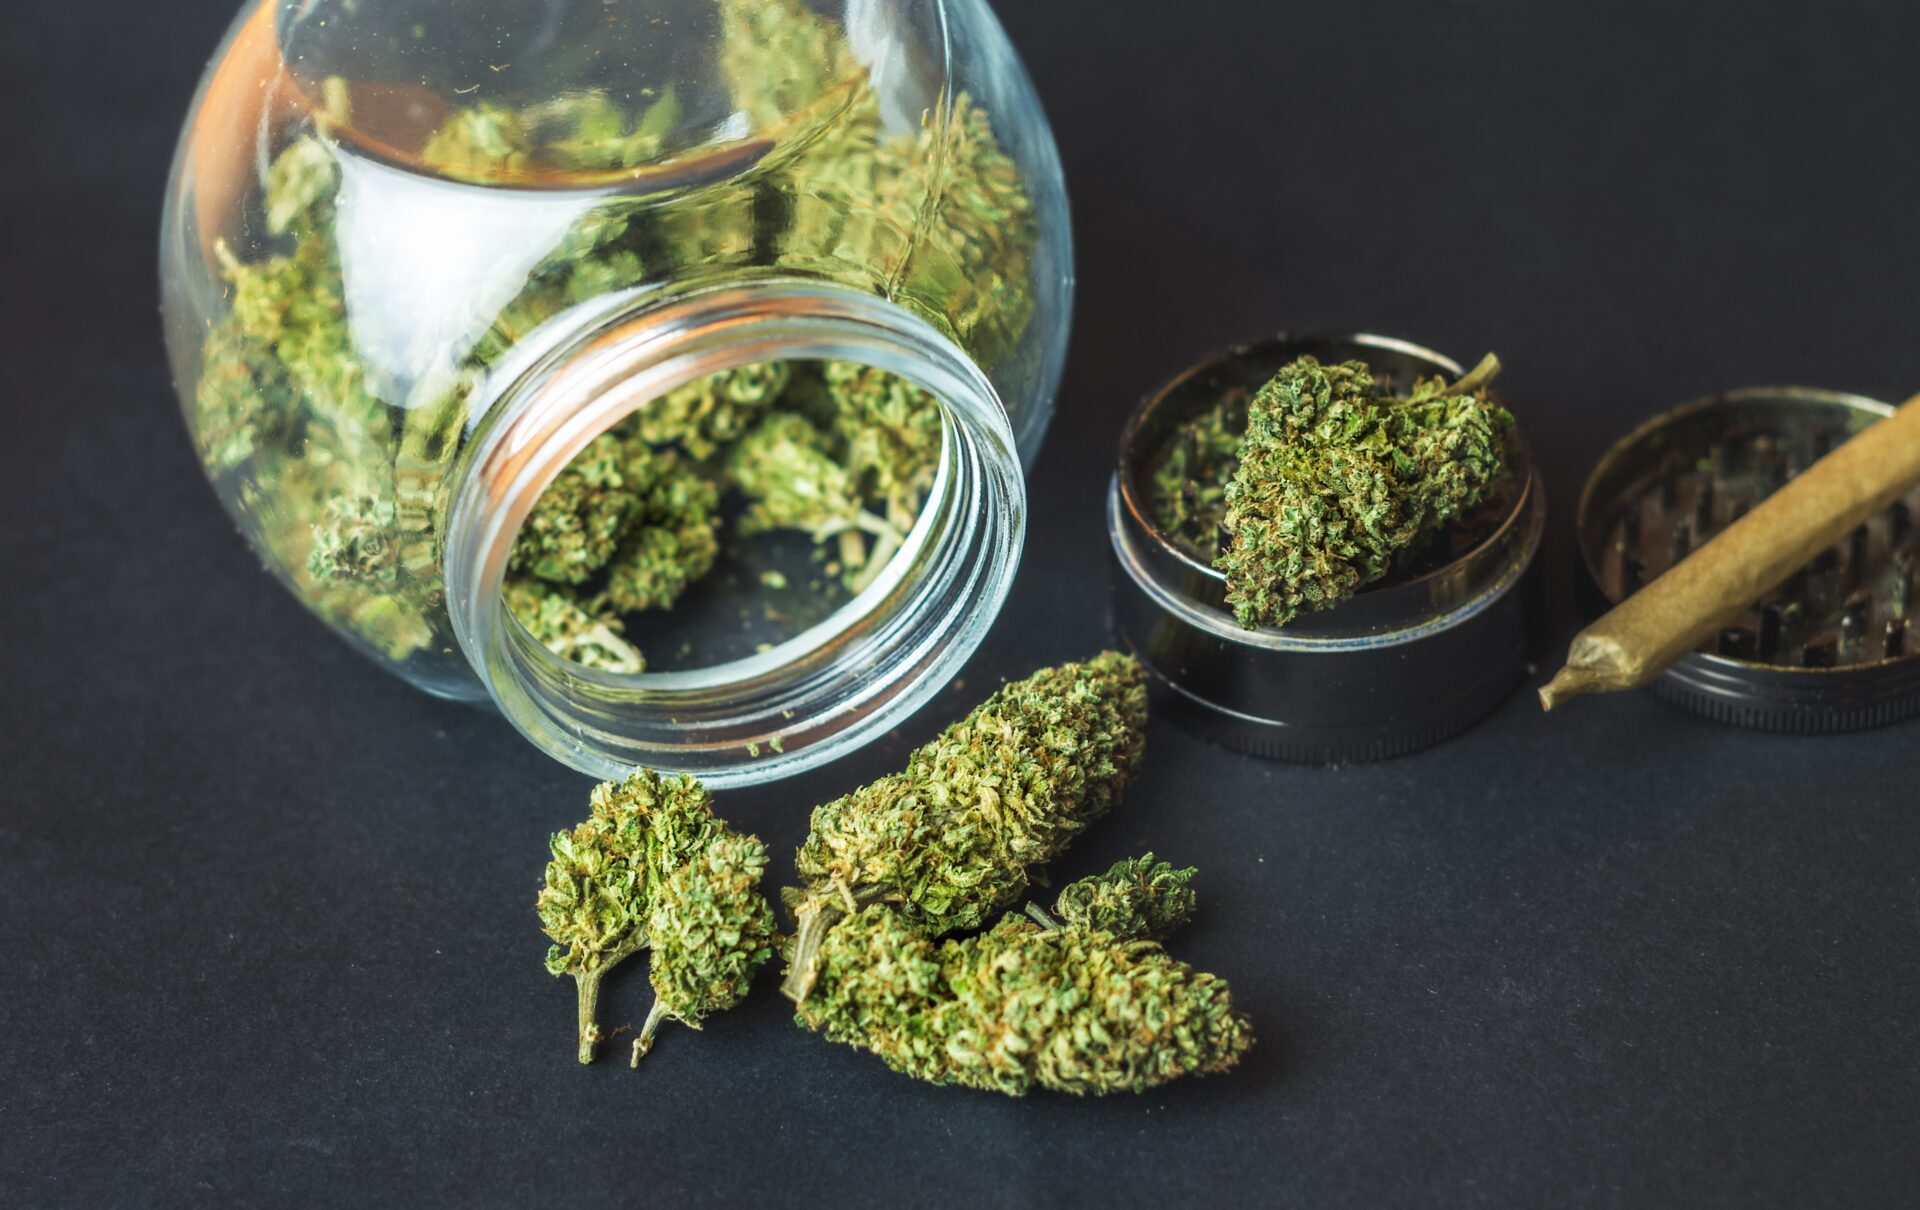 cannabis-marijuana-flower-buds-joint-and-grinder-2022-11-15-11-08-48-utc